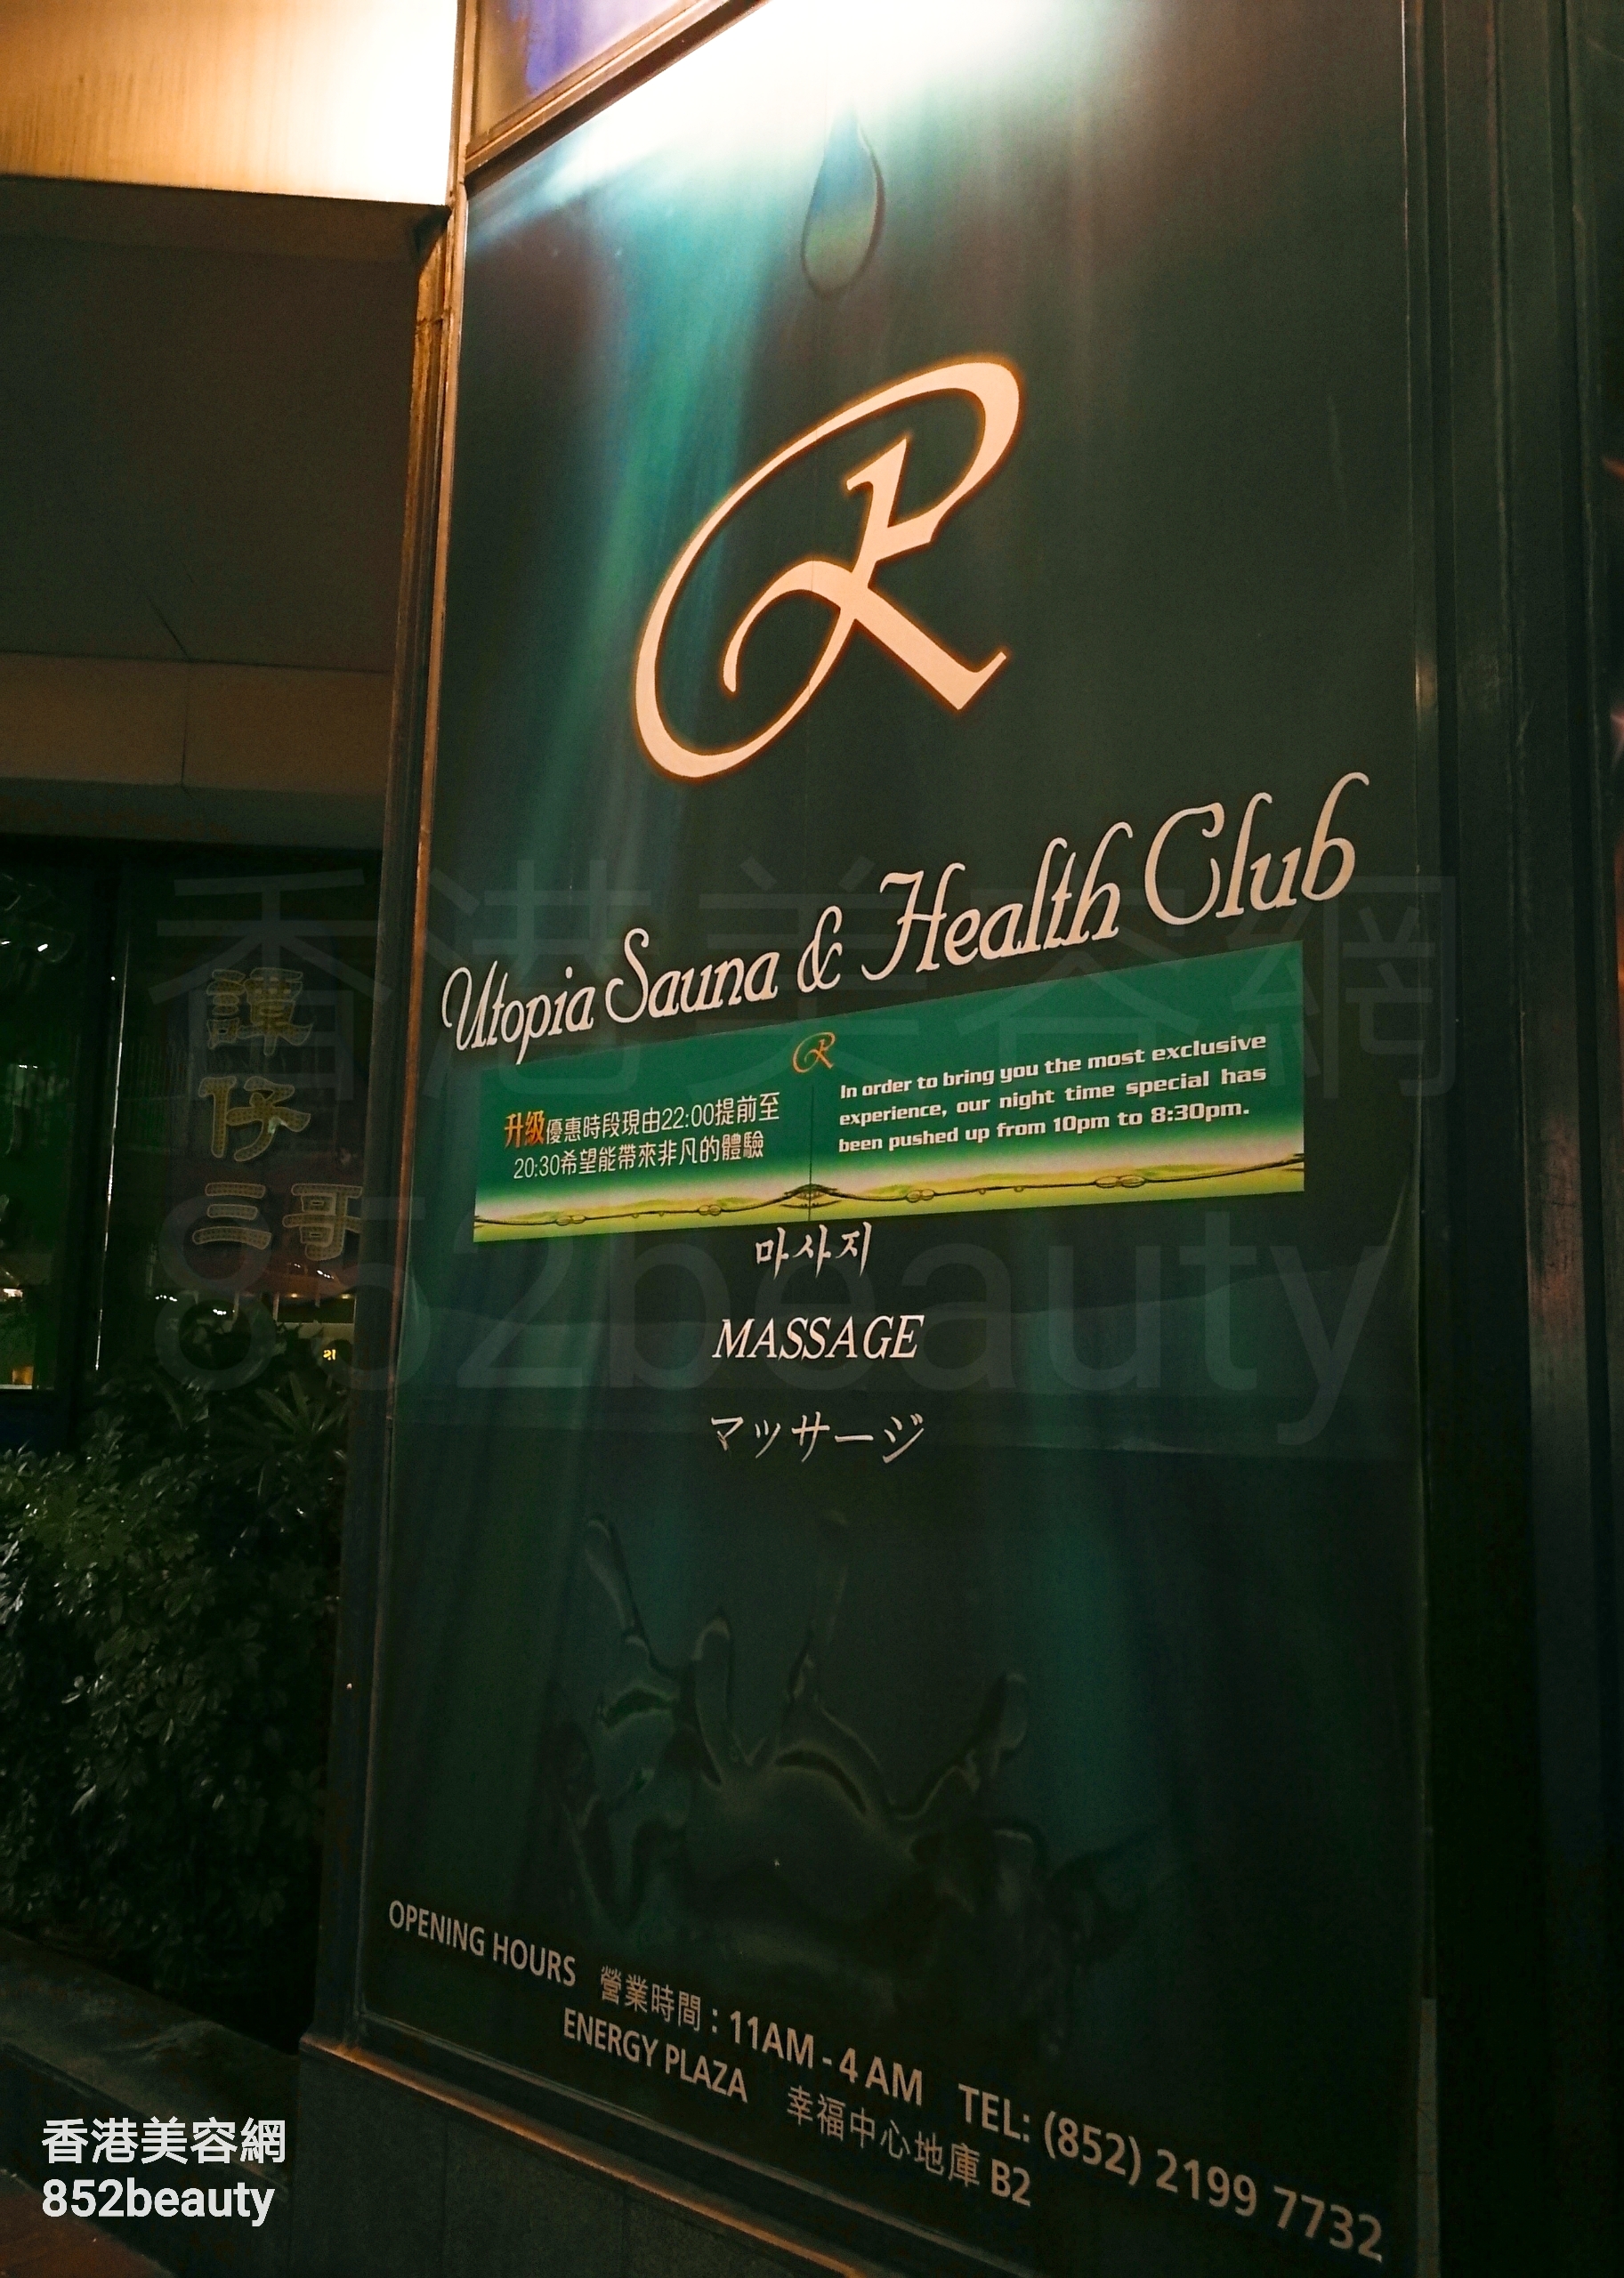 香港美容網 Hong Kong Beauty Salon 美容院 / 美容師: Utopia Sauna & Health Club